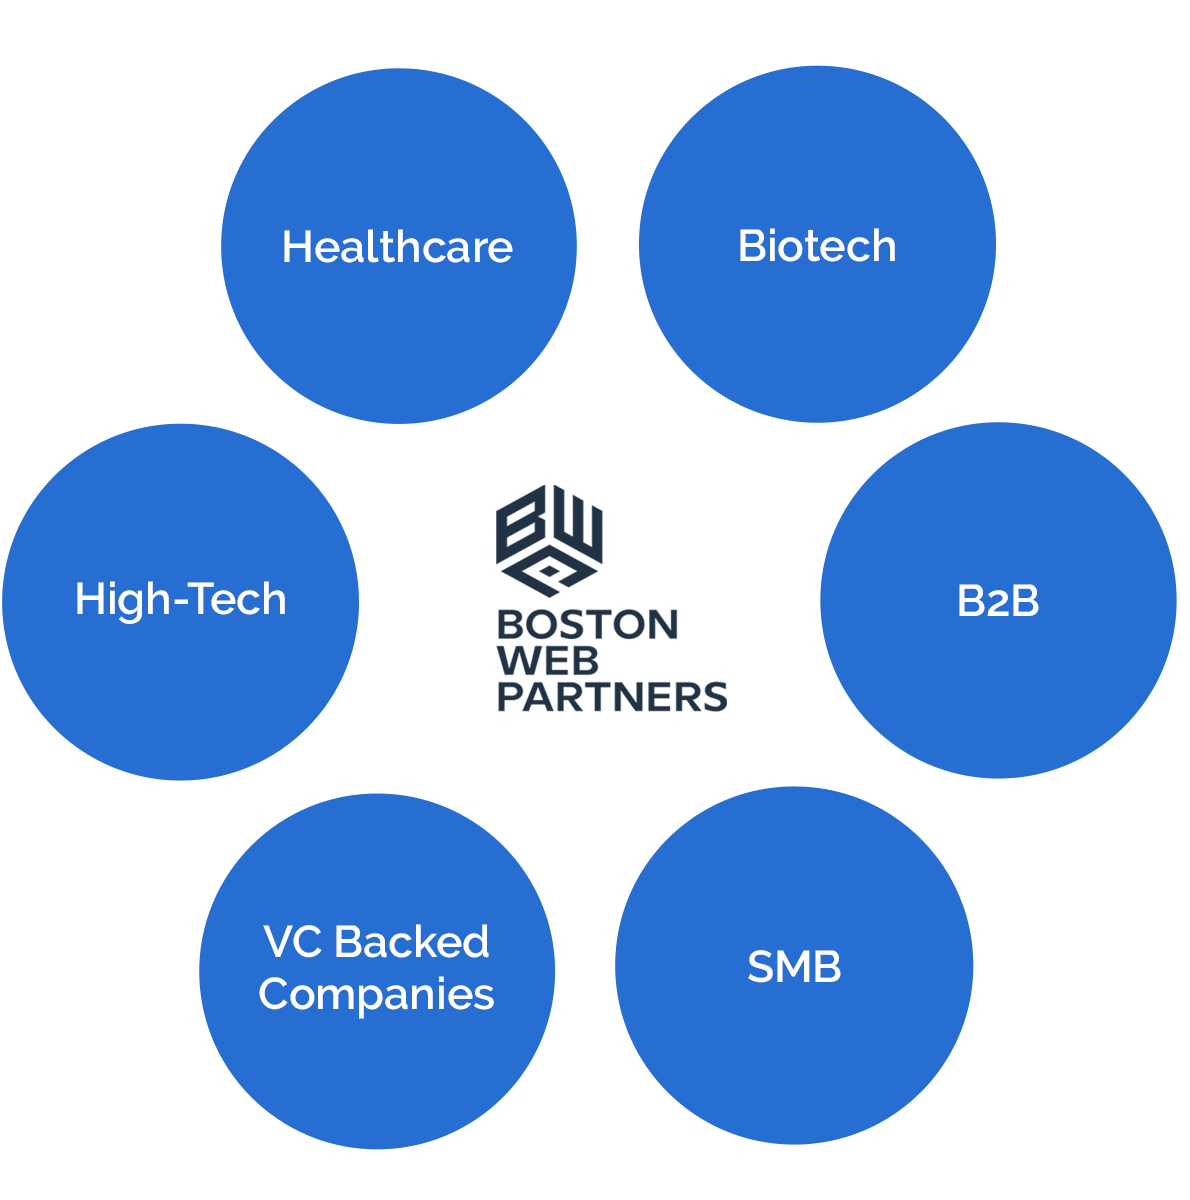 Boston Web Partners industry focus